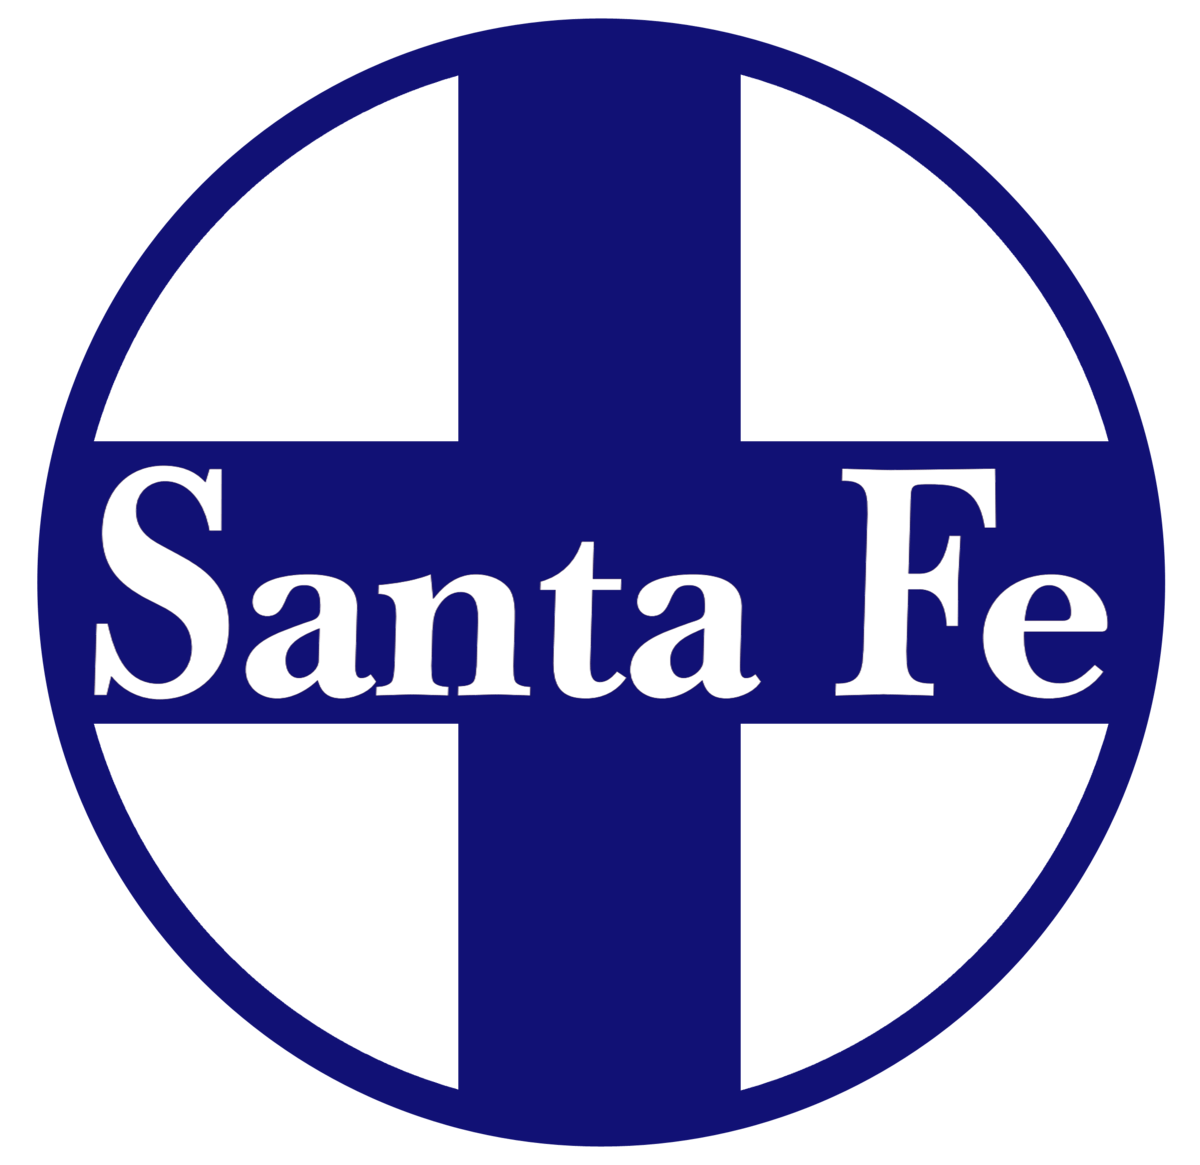 Railroad Company Logo - Atchison, Topeka and Santa Fe Railway